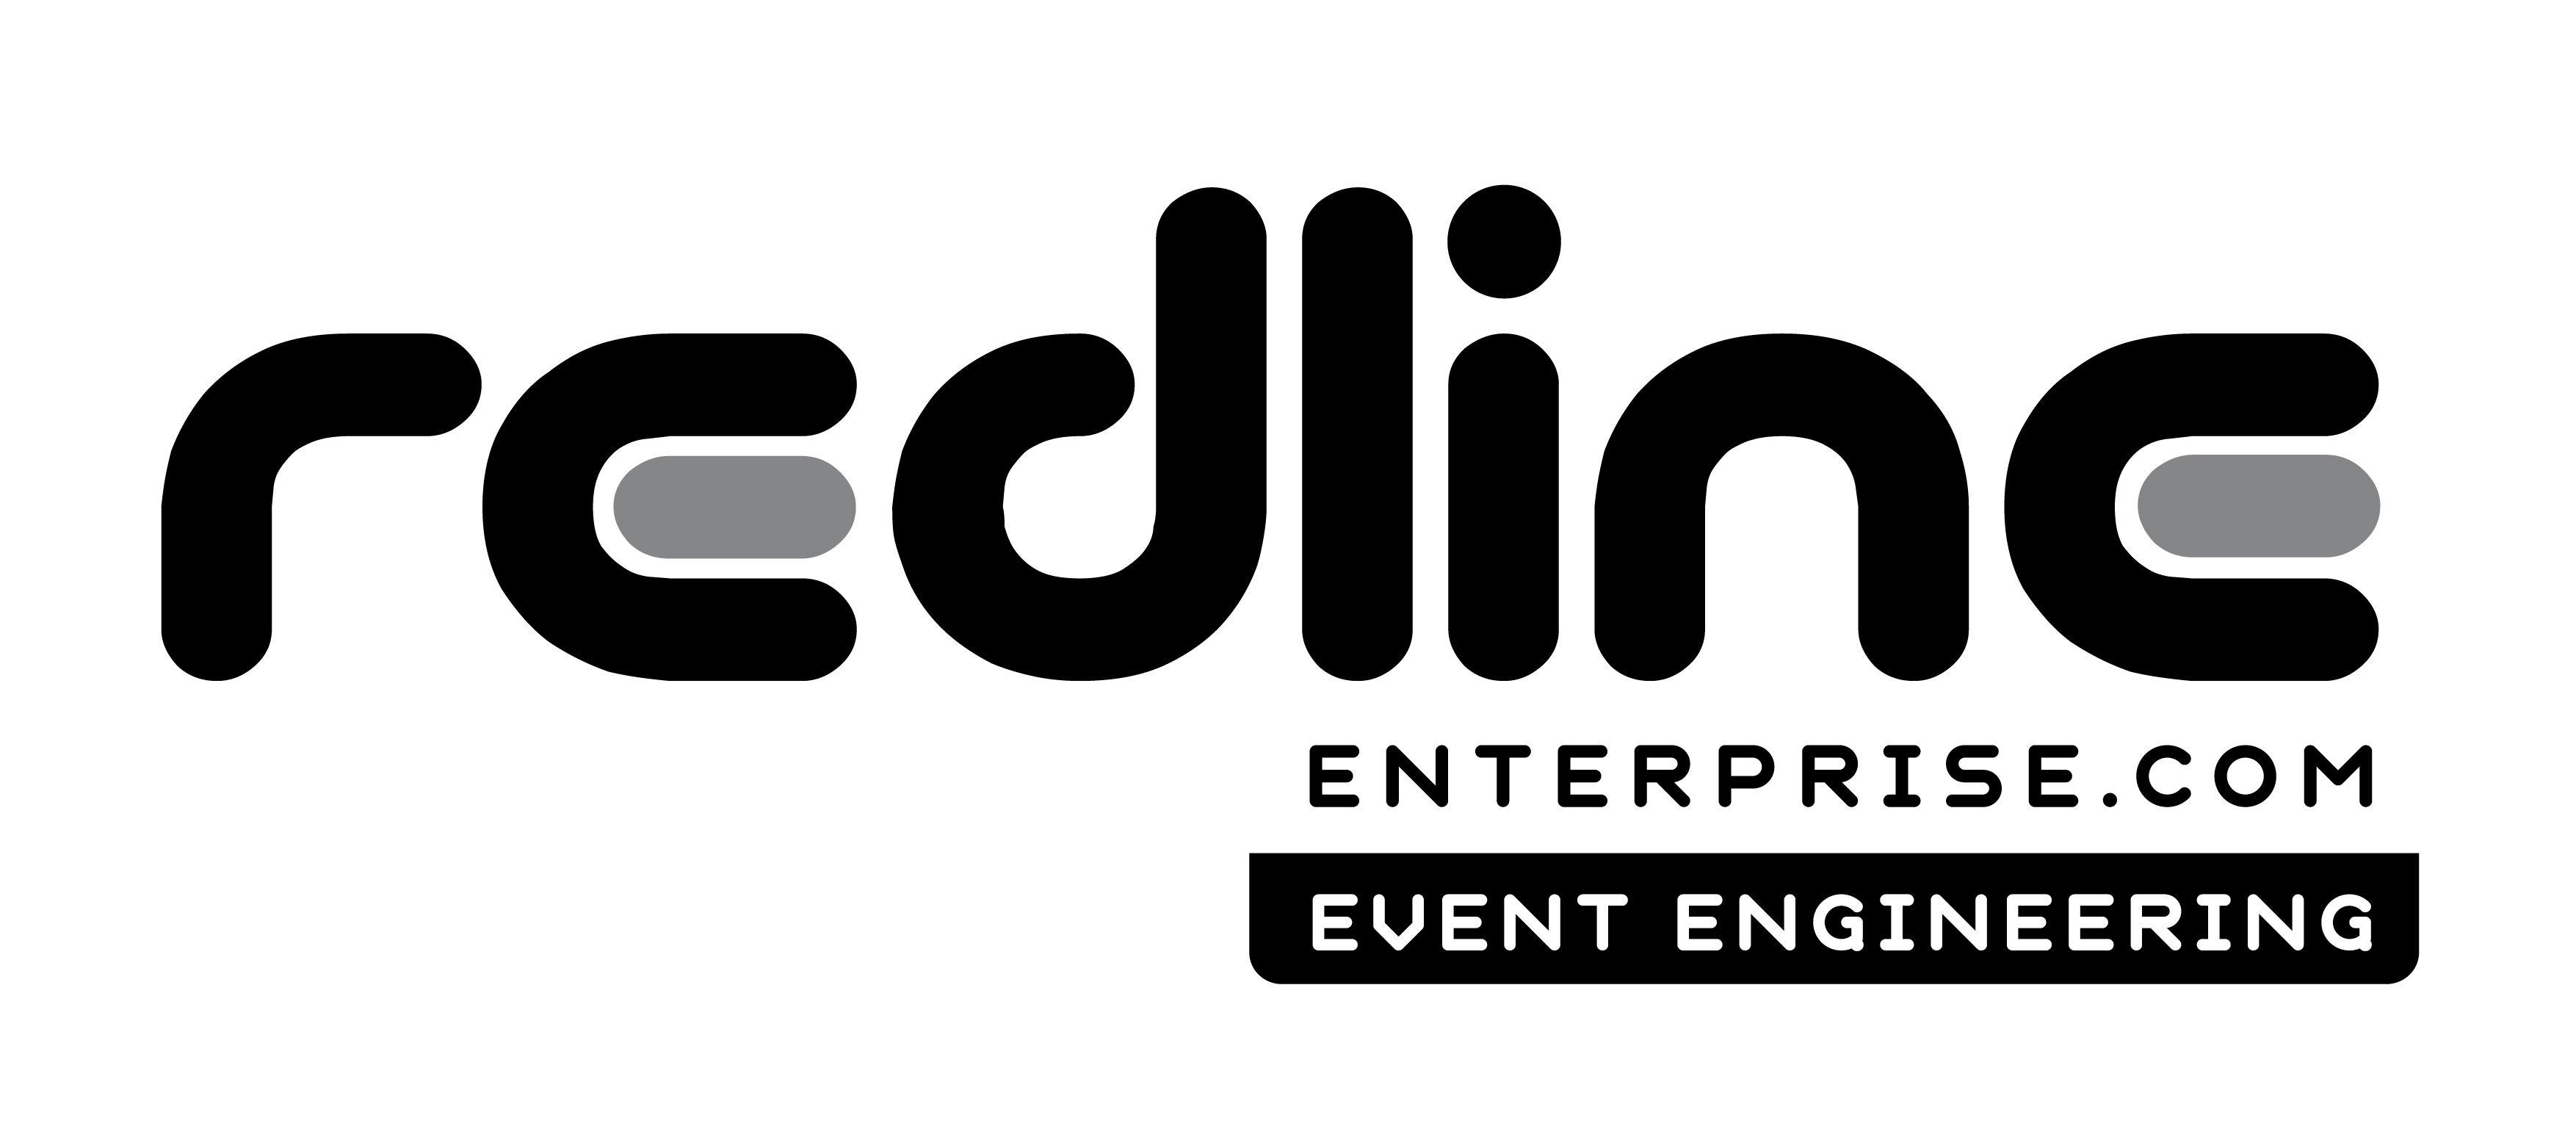 White with Red Line Logo - Press | Redline Enterprise